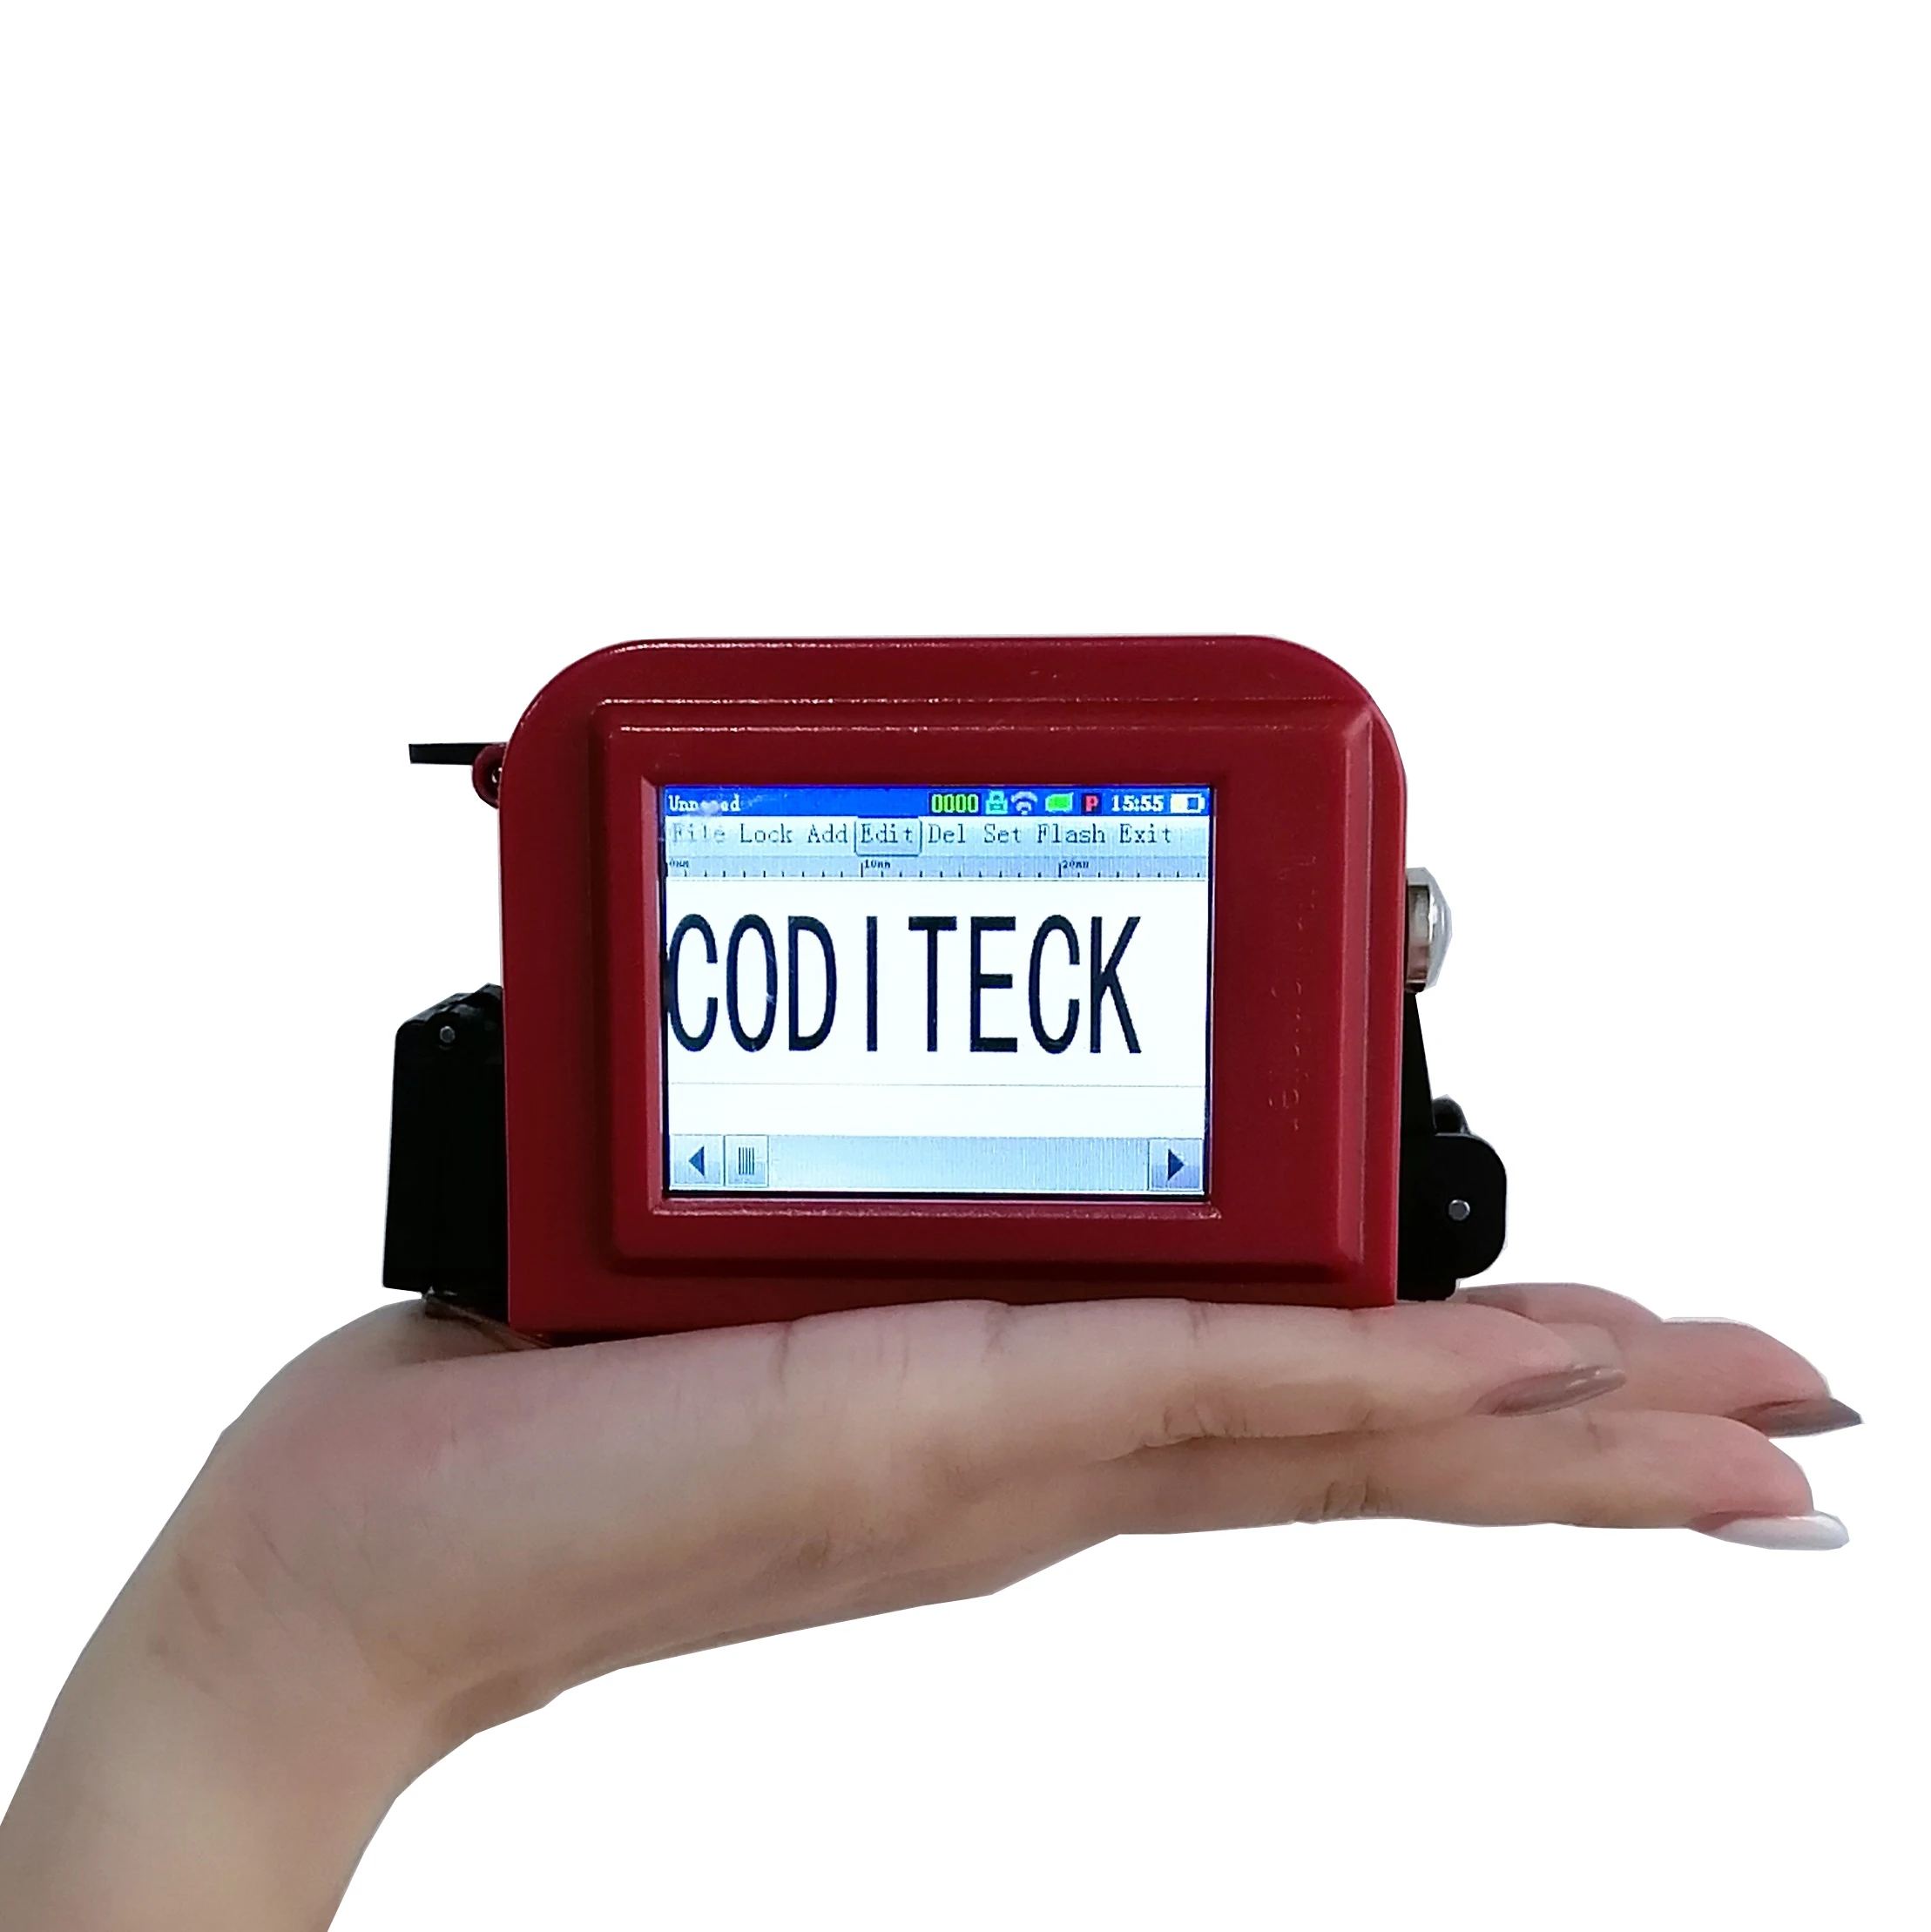 

Coditeck 12.7mm mini pocket handheld inkjet printer